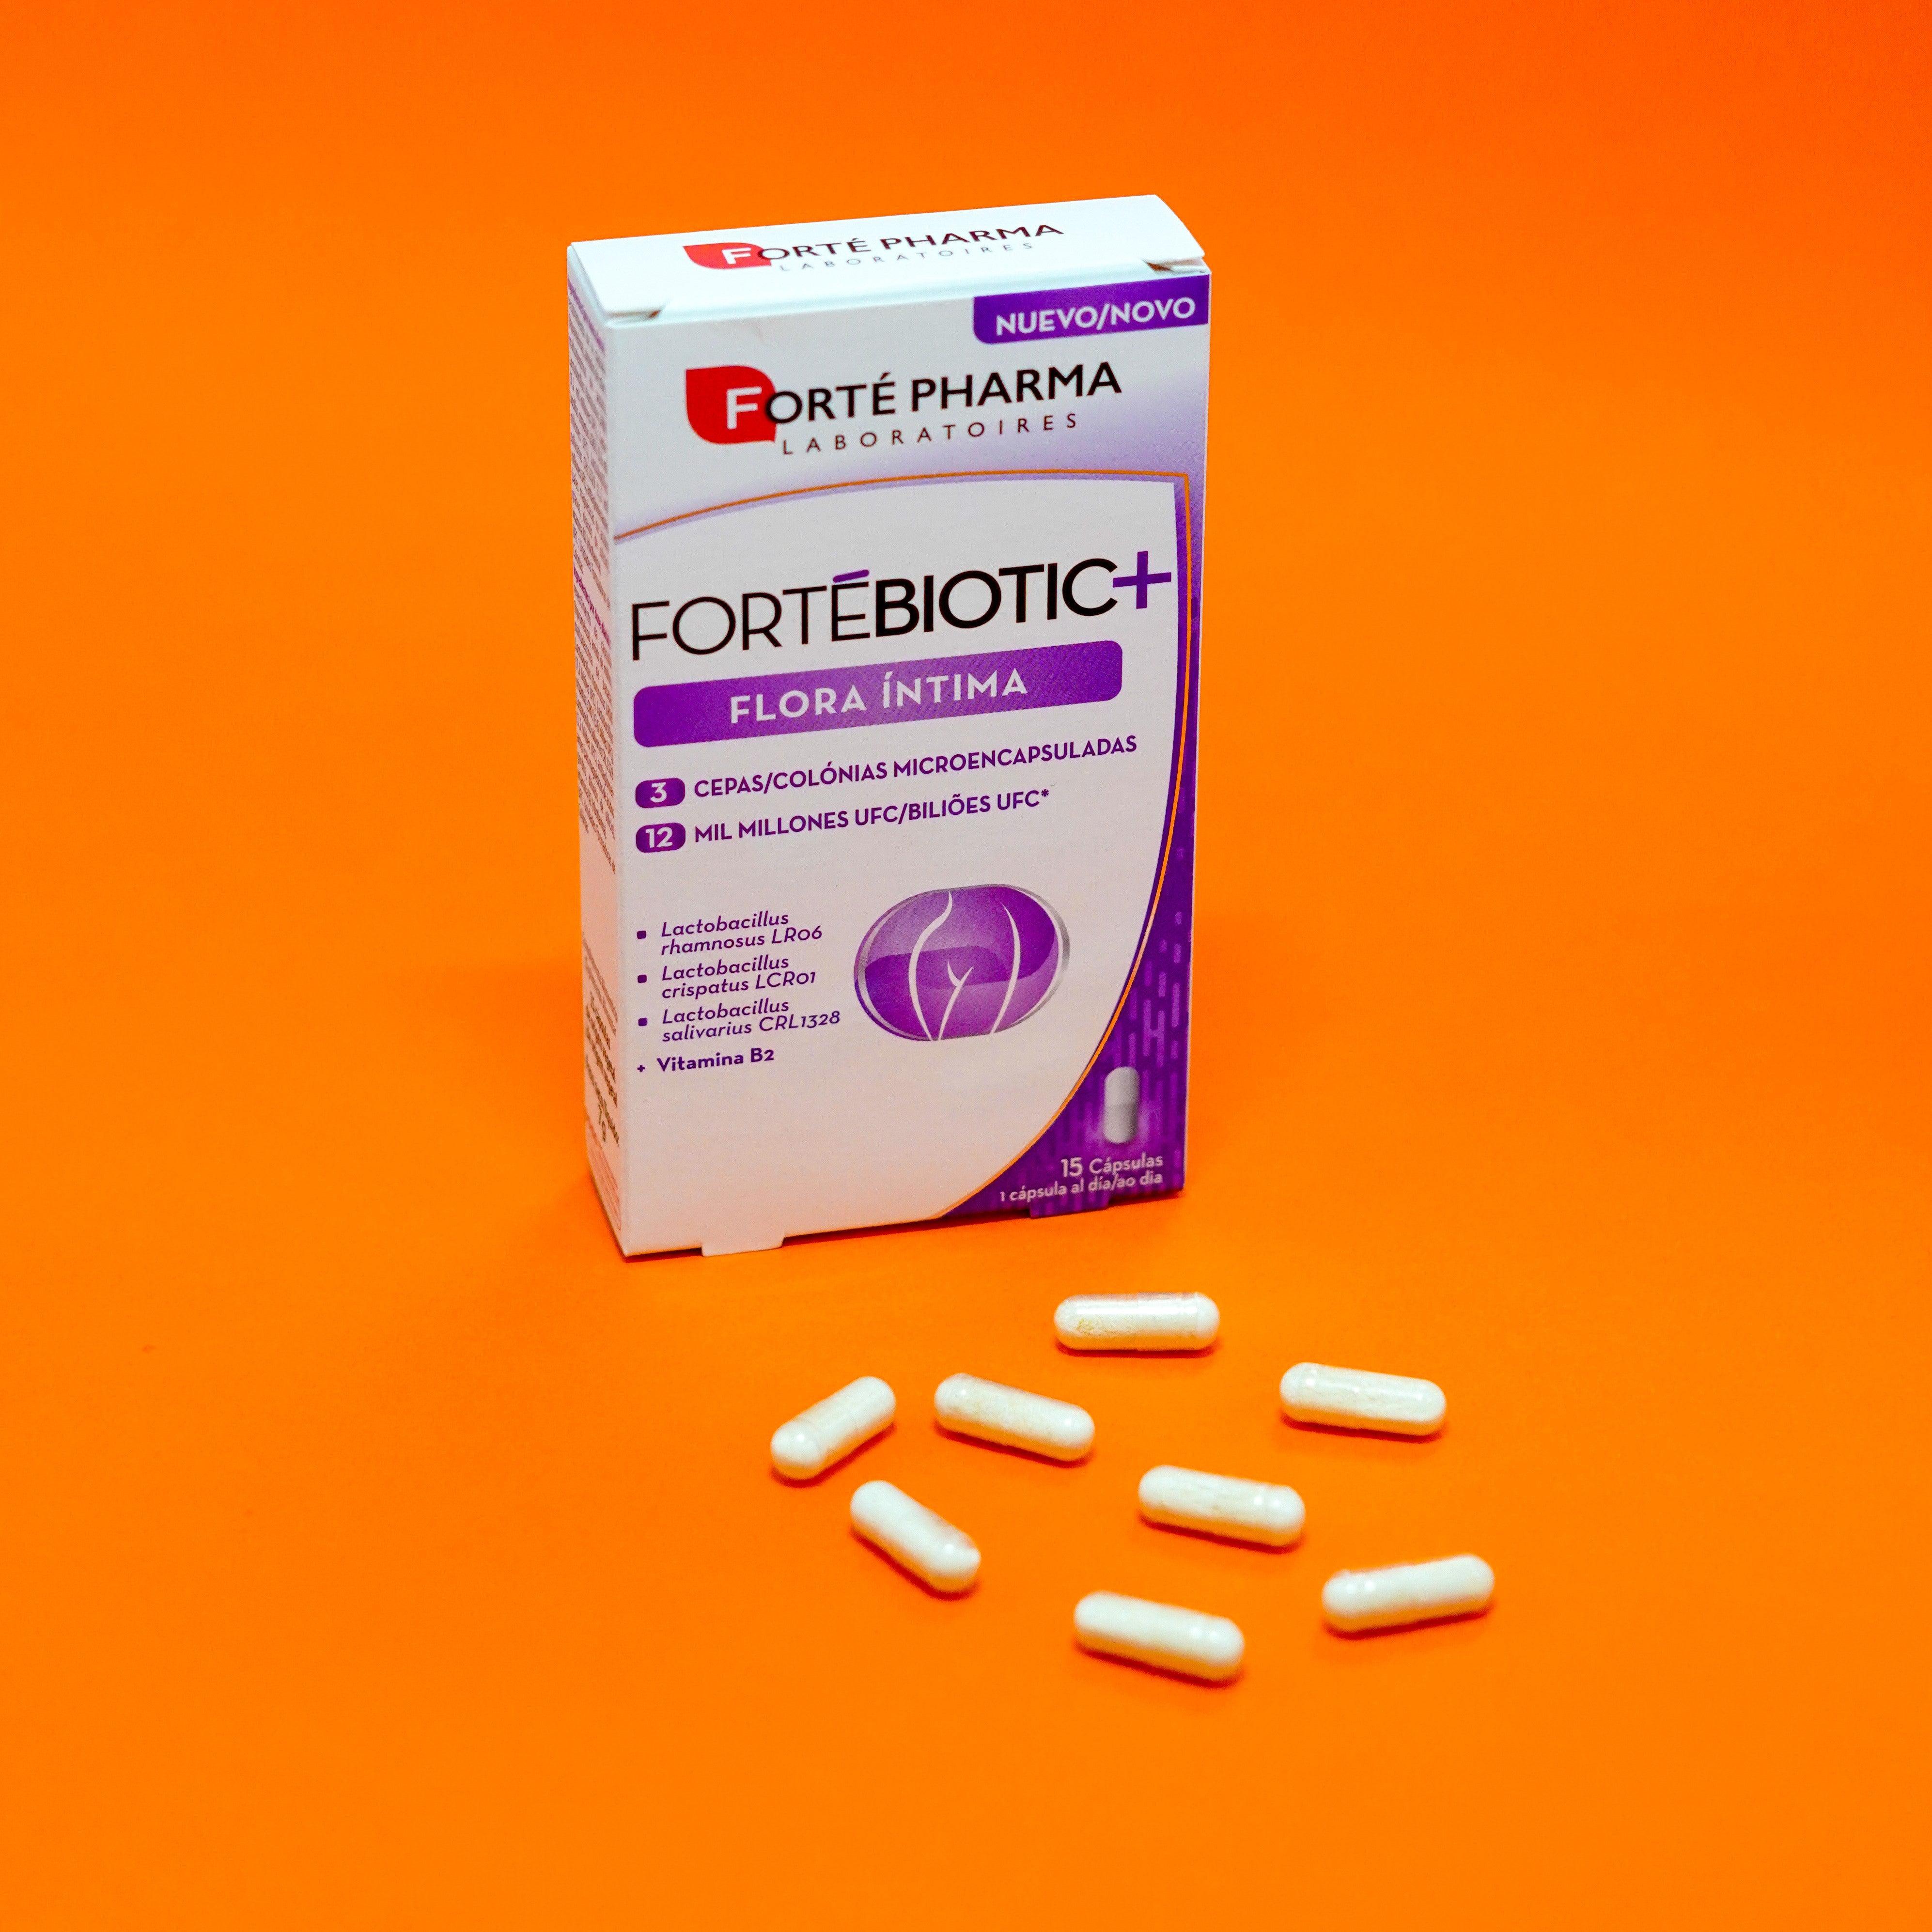 fortébiotic+ flora intima-Forté Pharma